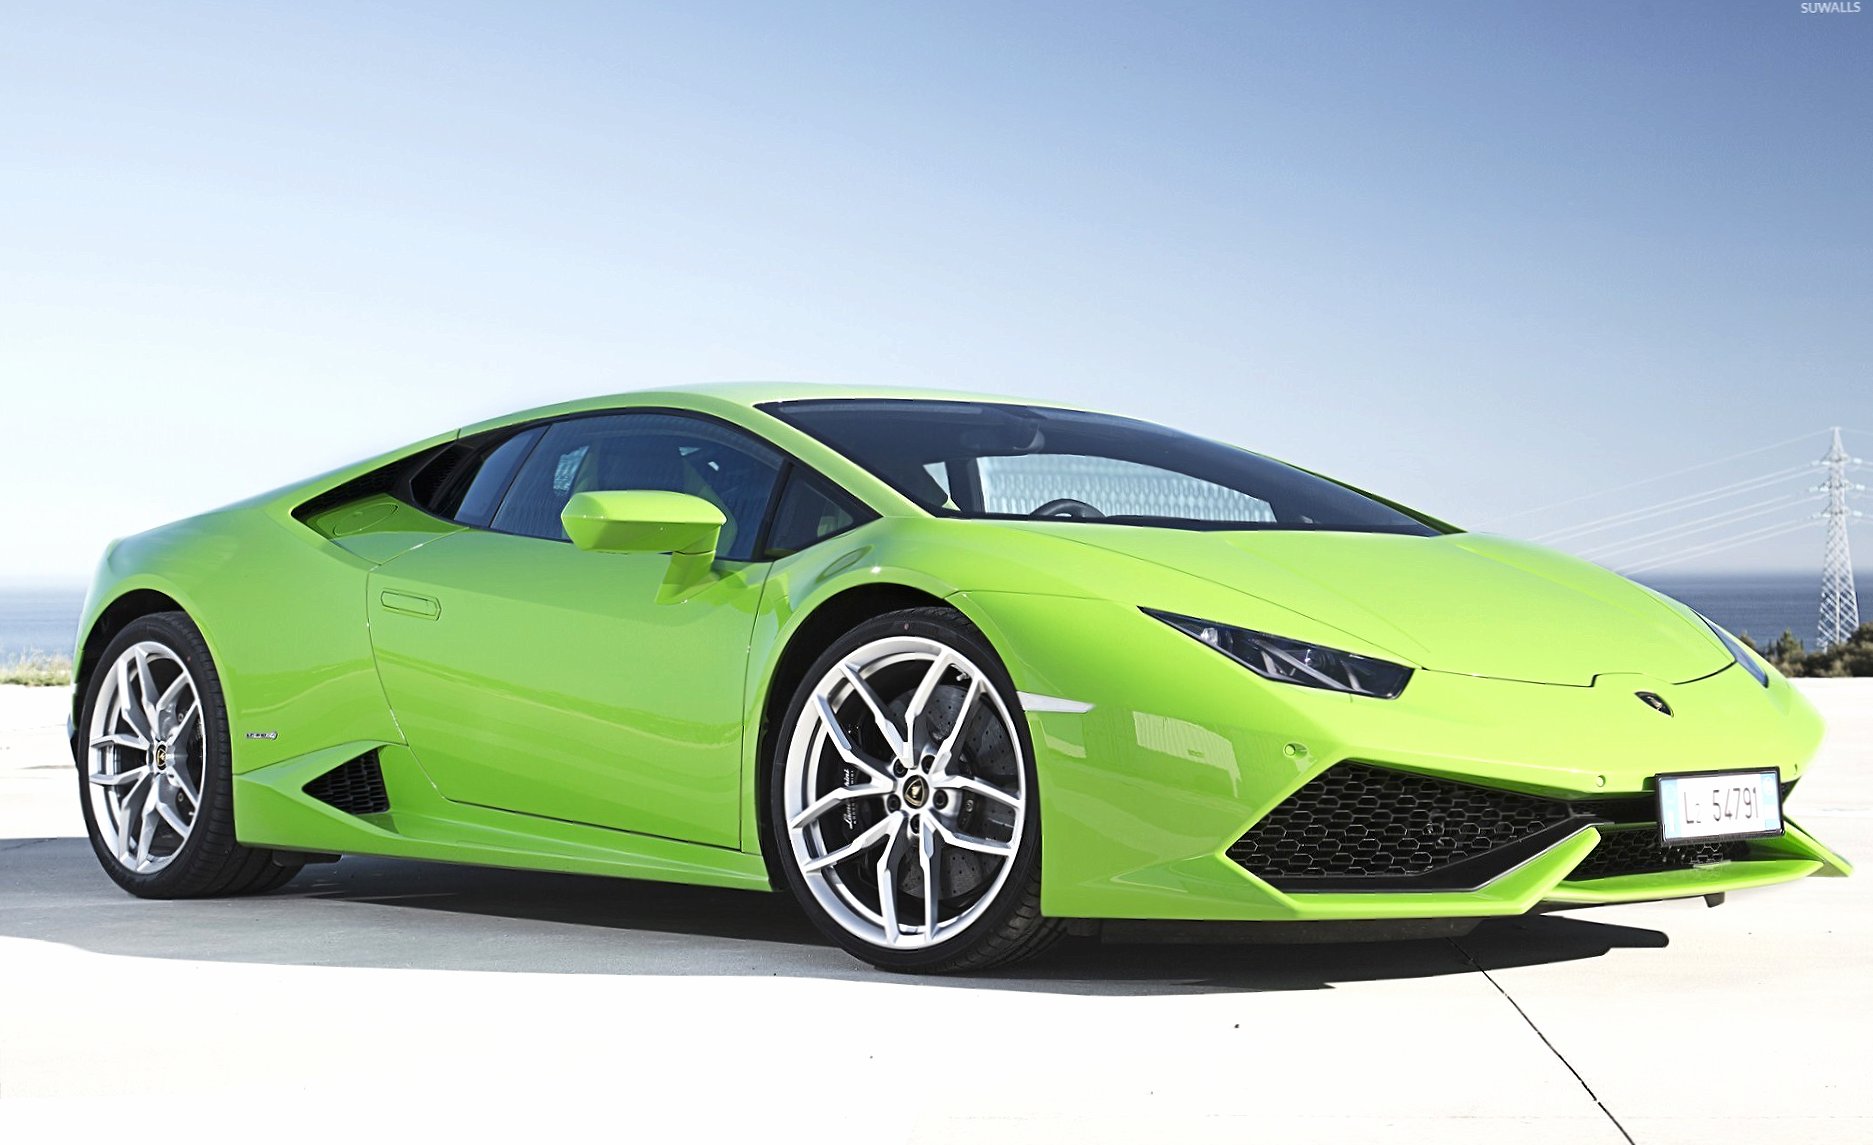 2014 Green Lamborghini Huracan at 1280 x 960 size wallpapers HD quality